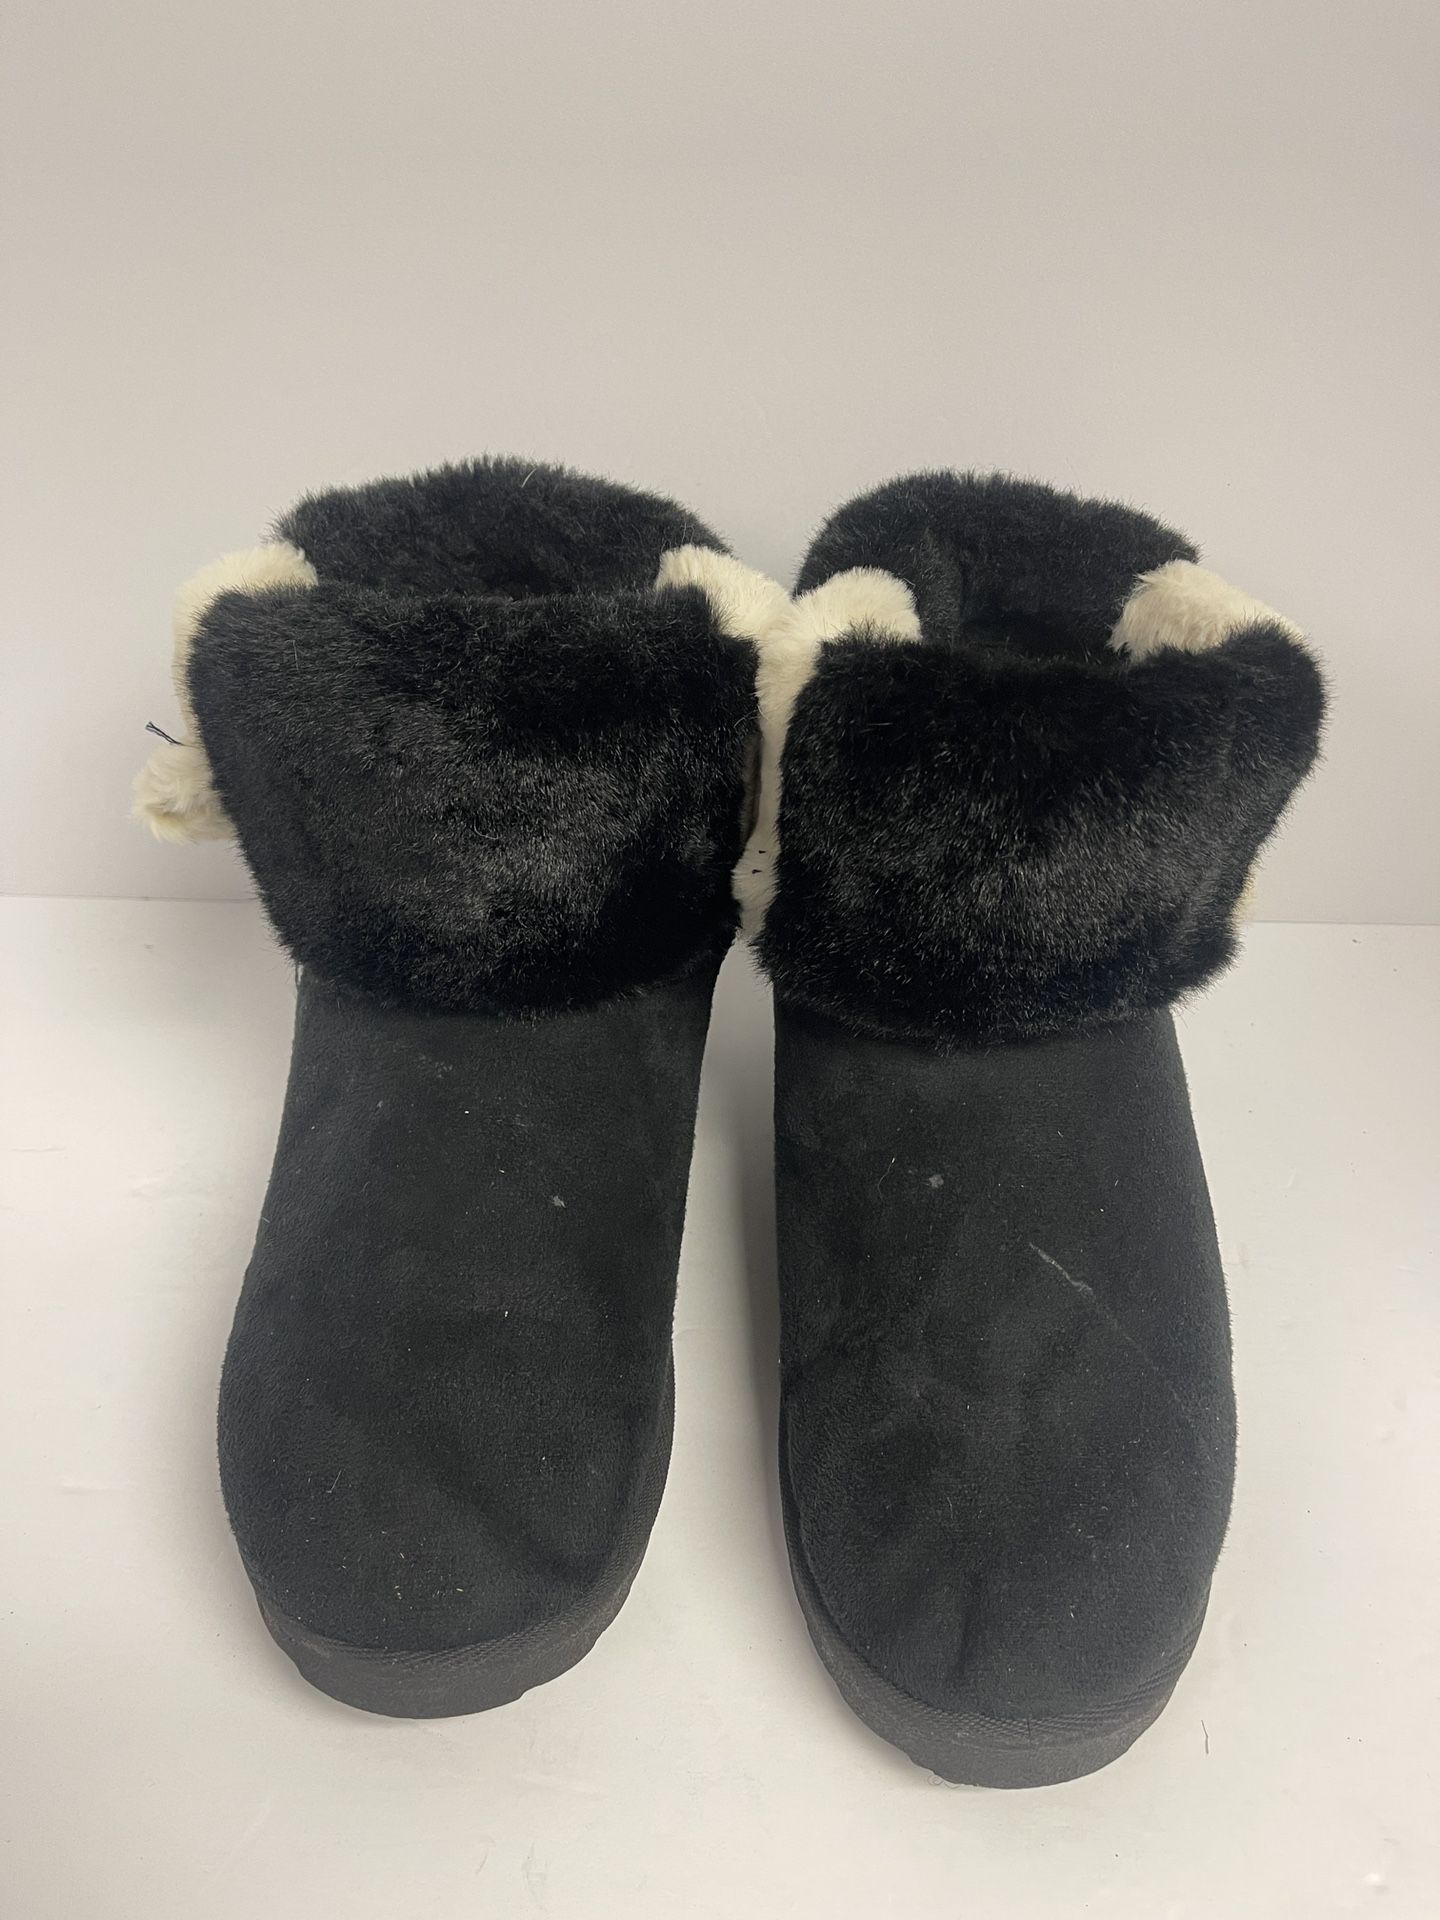 MUDD Cherry-97LP slip on Suede shoe/boot Black & White cuff Size 11 I497